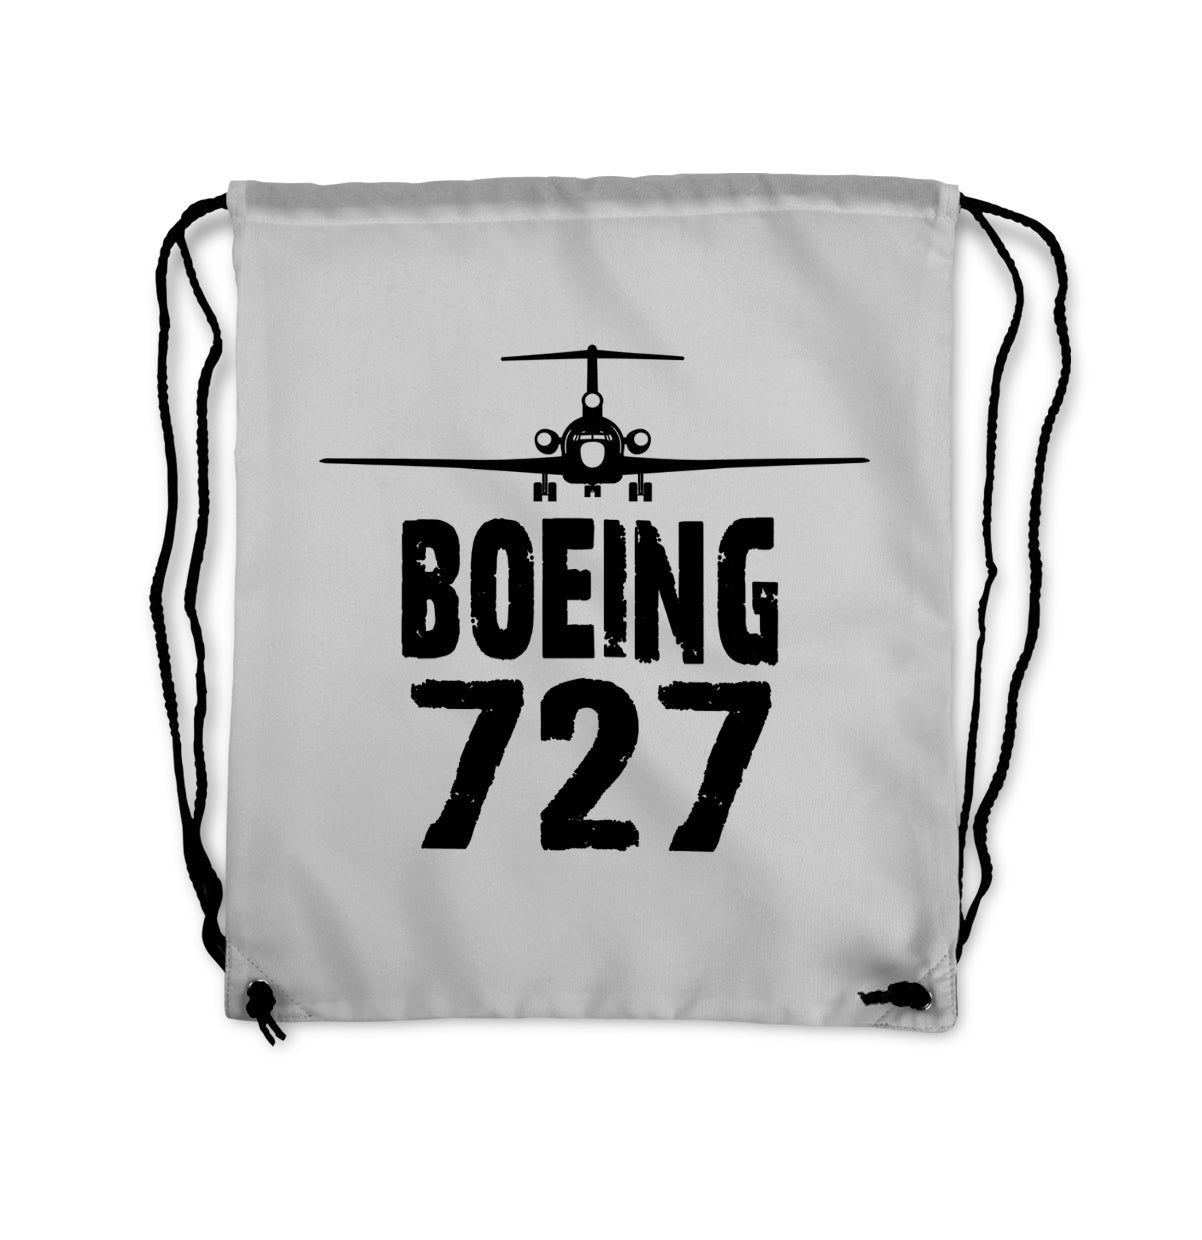 Boeing 727 & Plane Designed Drawstring Bags